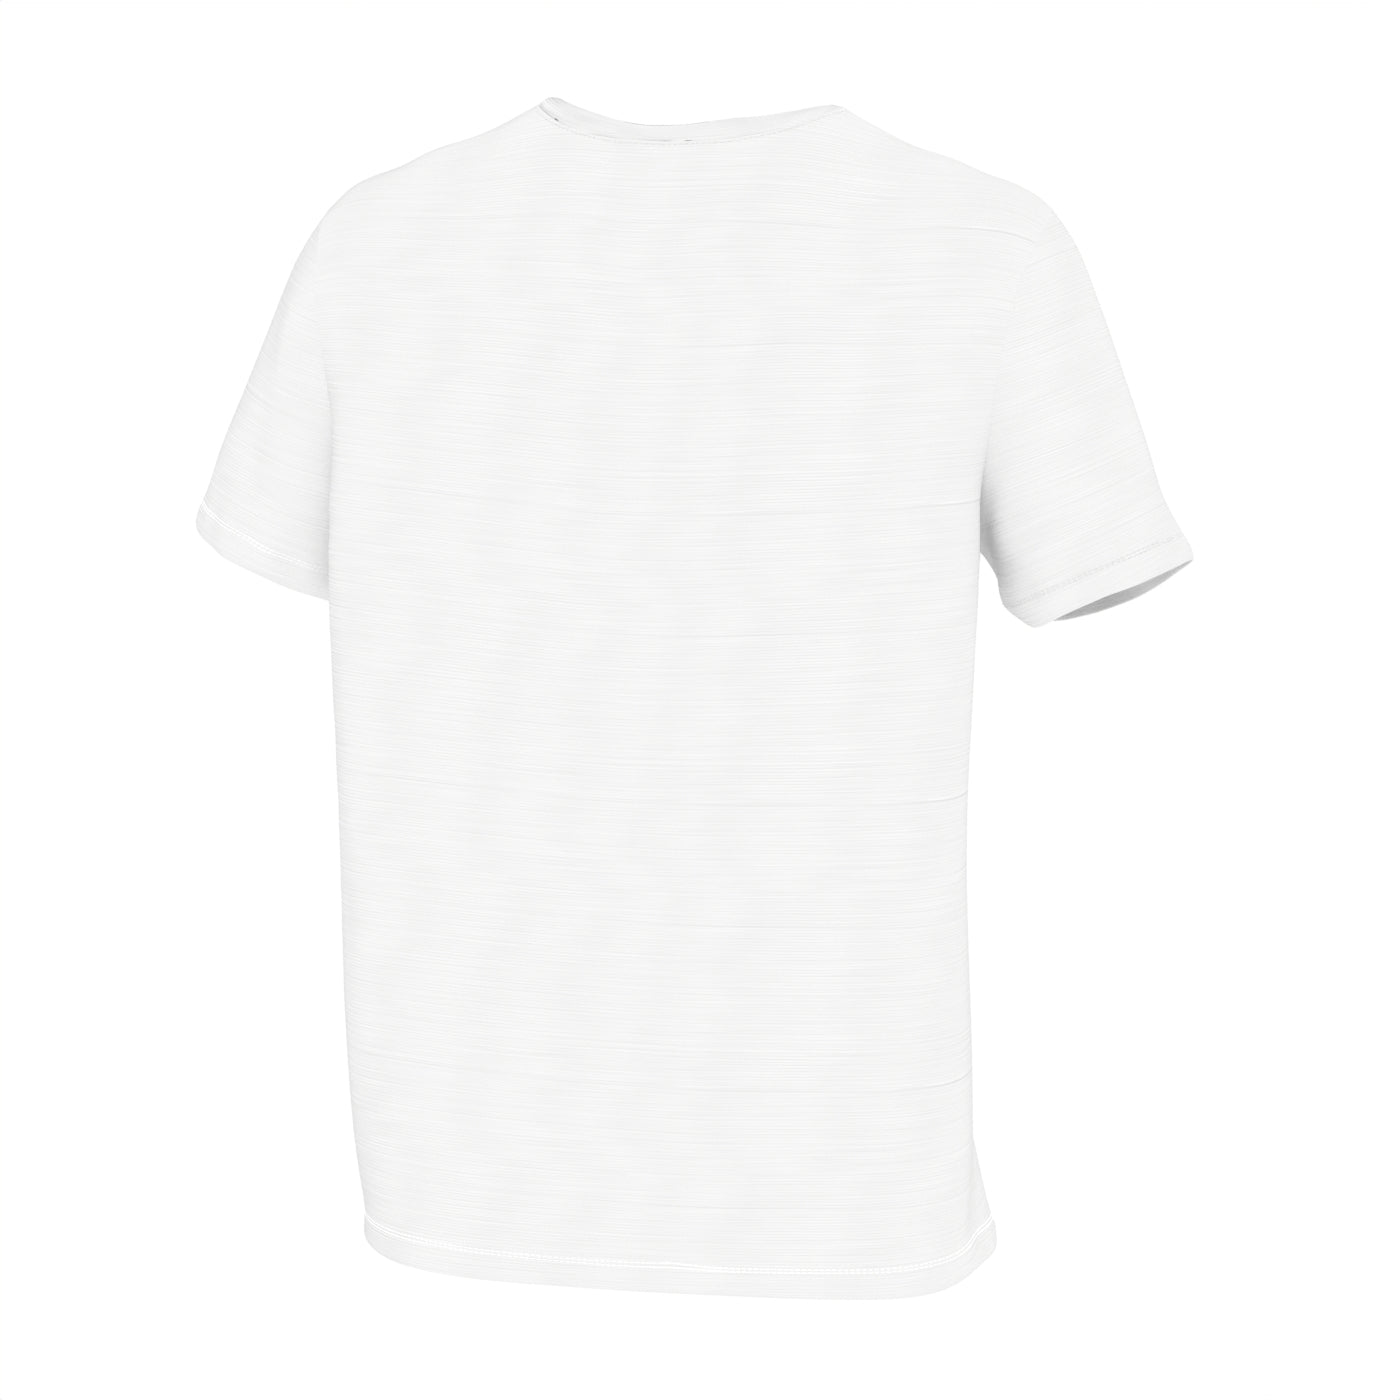 Crocco T-Shirt